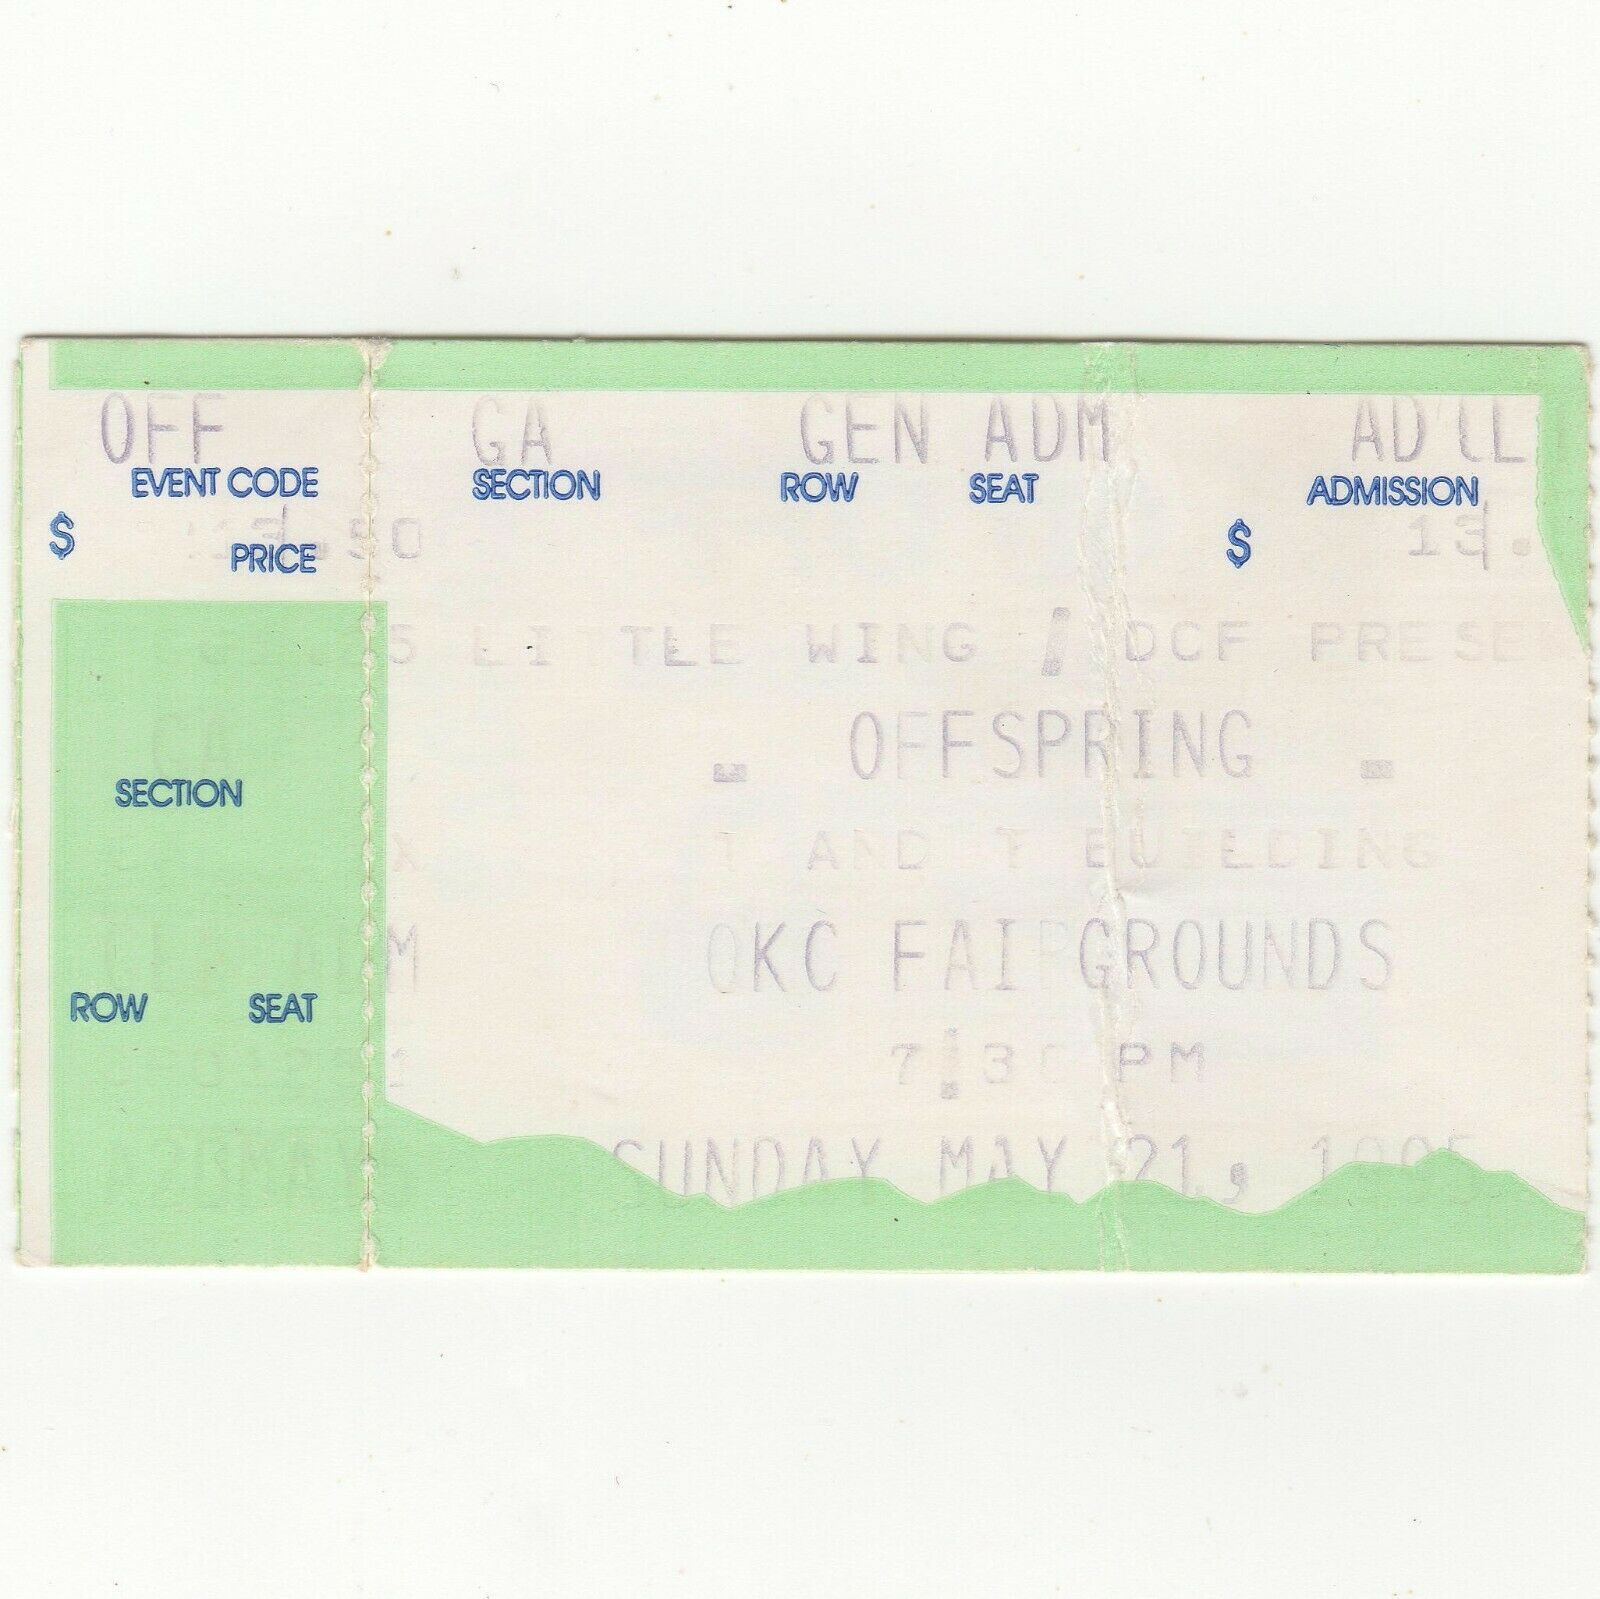 THE OFFSPRING & VANDALS Concert Ticket Stub OKLAHOMA CITY 5/21/95 TNT SMASH Tour